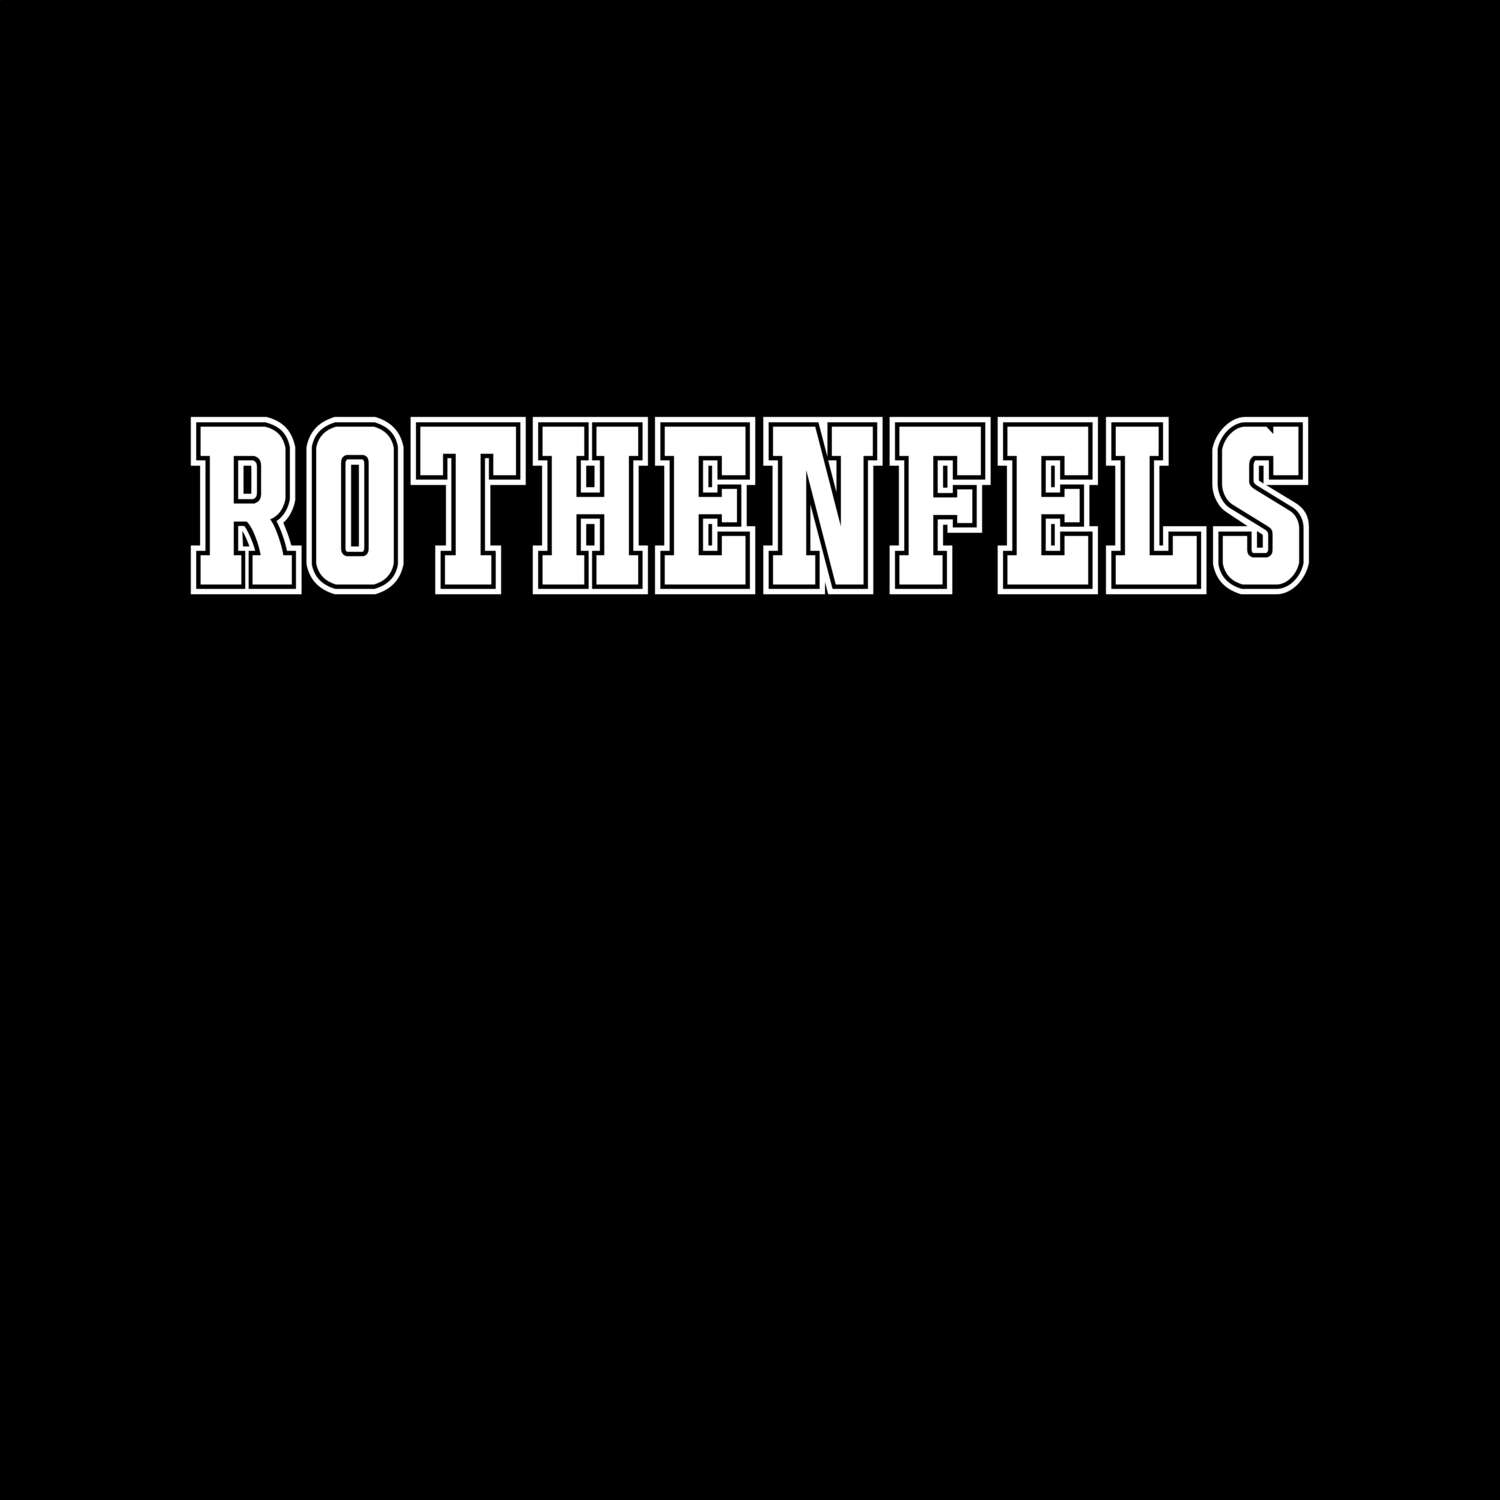 Rothenfels T-Shirt »Classic«